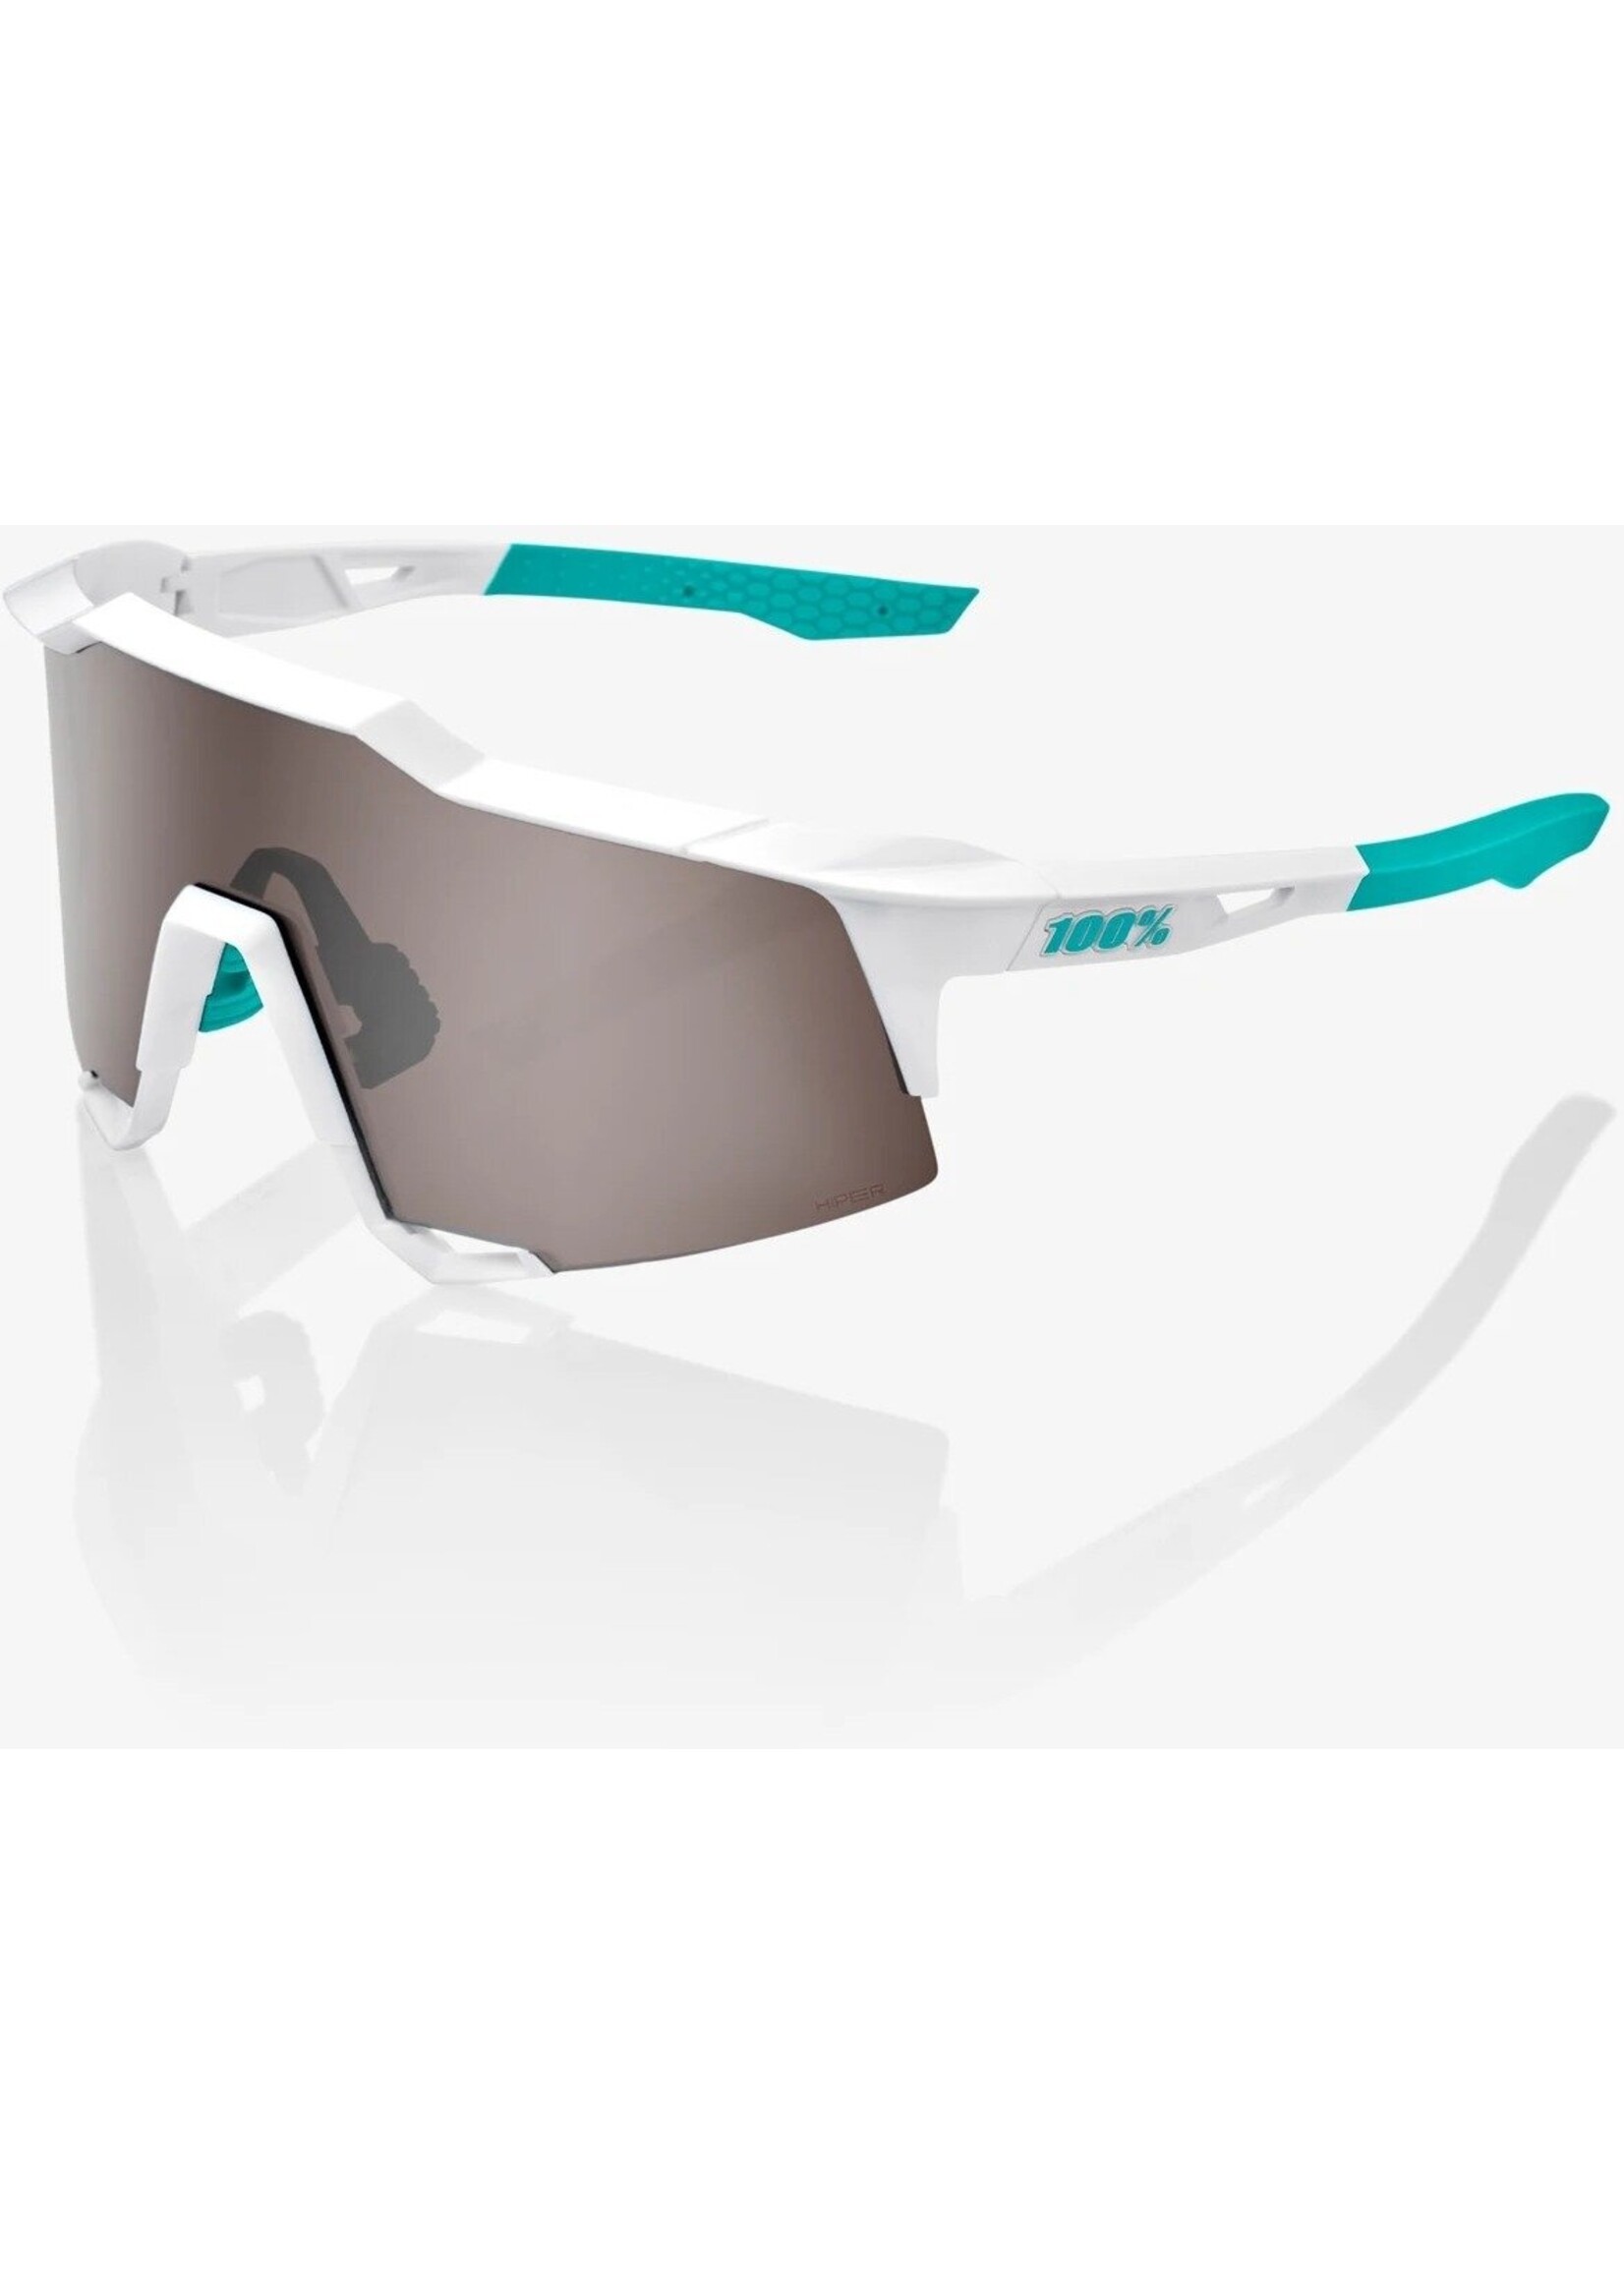 100 Percent 100% SpeedCraft Sunglasses, SE BORA Hans Grohe Team White - HiPER Silver Mirror Lens